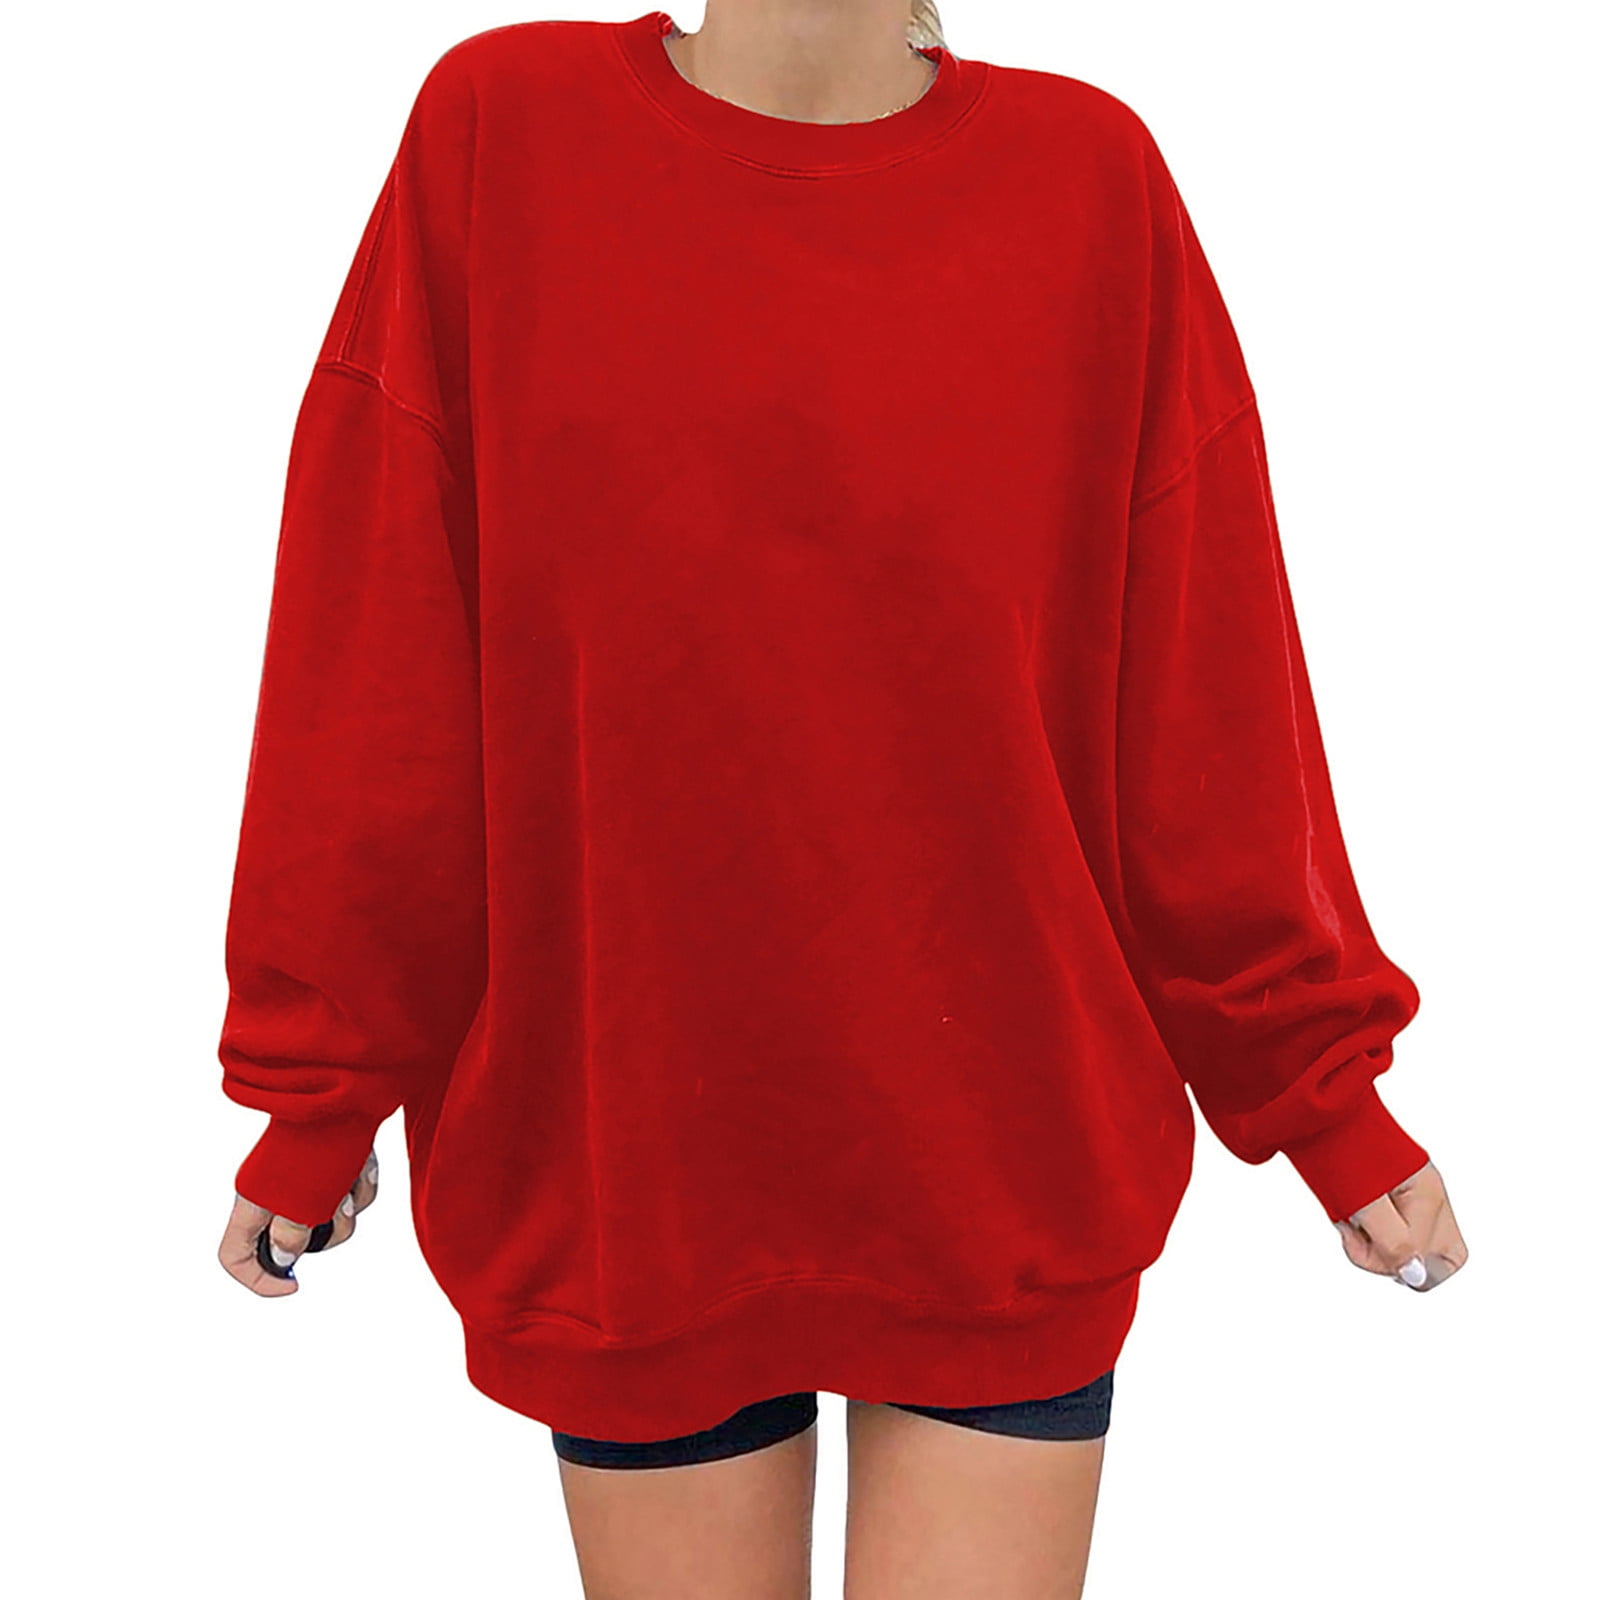 vbnergoie Sweatshirt For Women Hoodies Solid Color O Neck Long